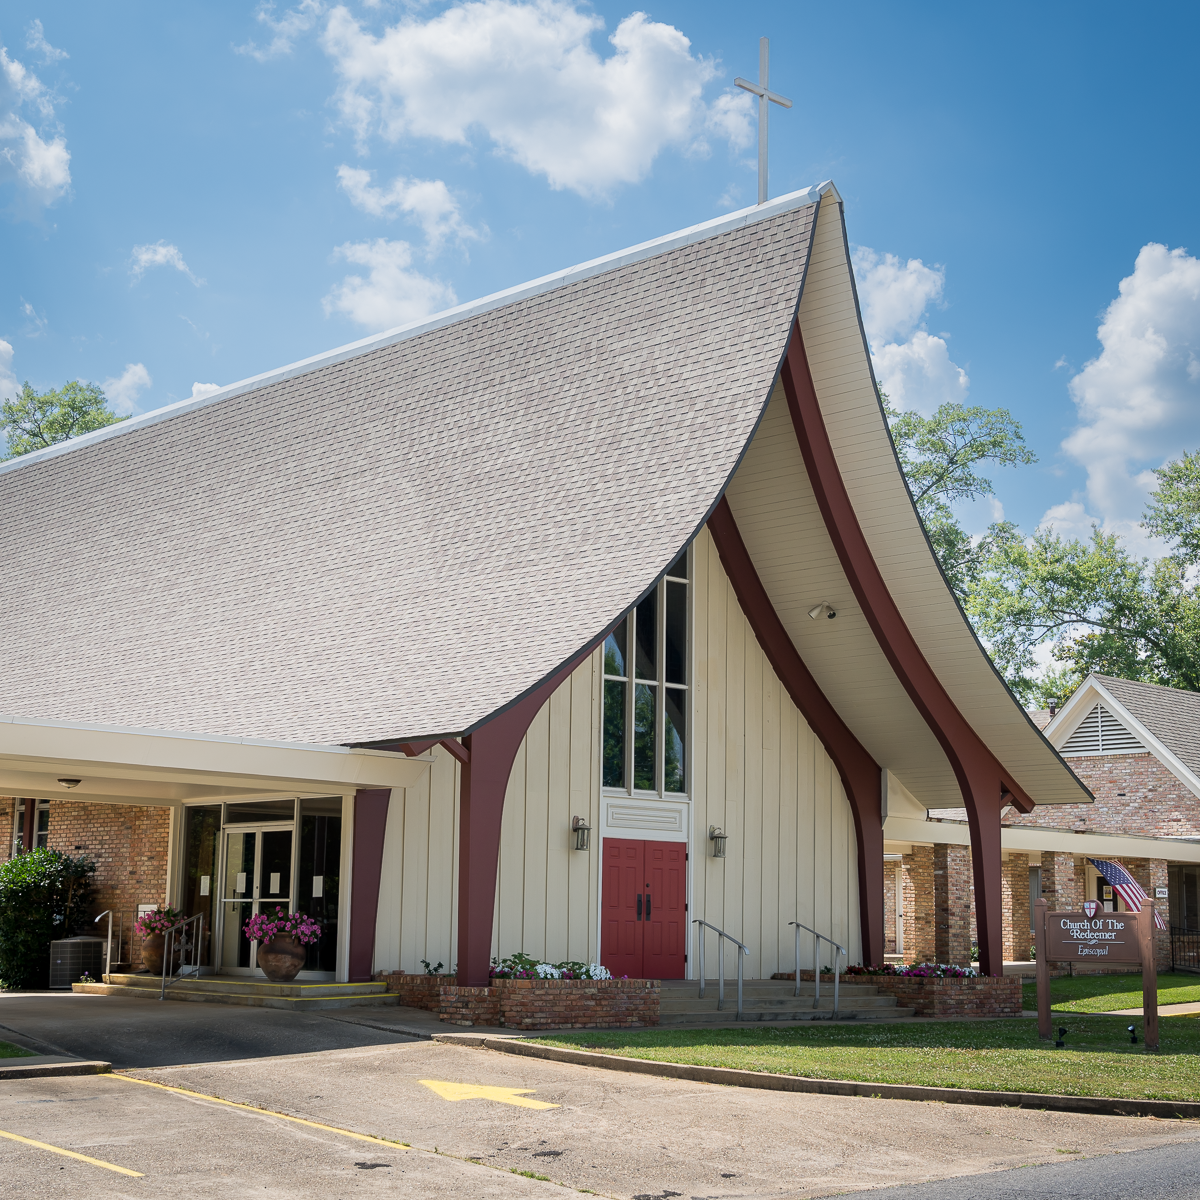 Exterior Photograph of the Episcopal Church of the Redeemer in Ruston, Louisiana